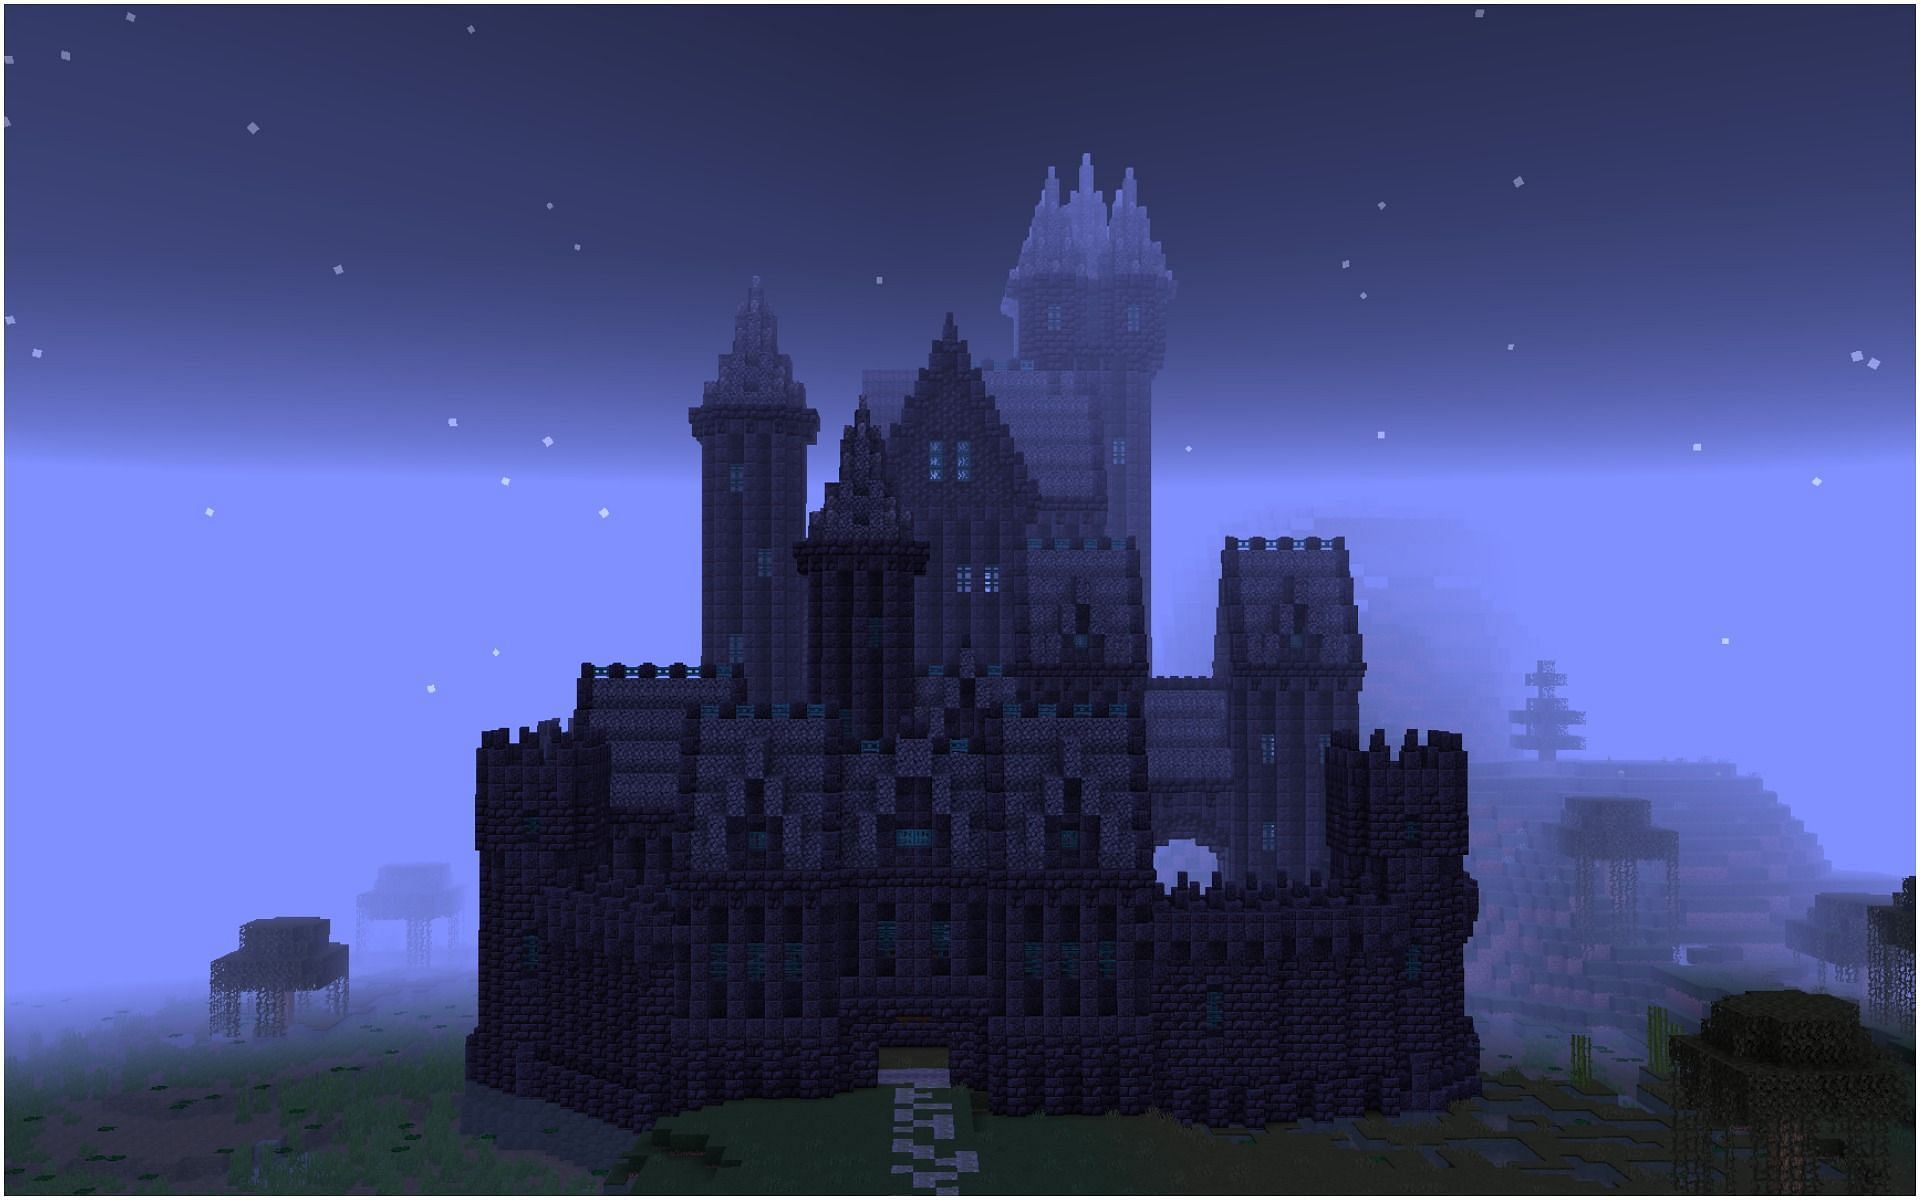 Minecraft: How to Build a Medieval Castle  Huge Medieval Castle Tutorial -  Part 1 